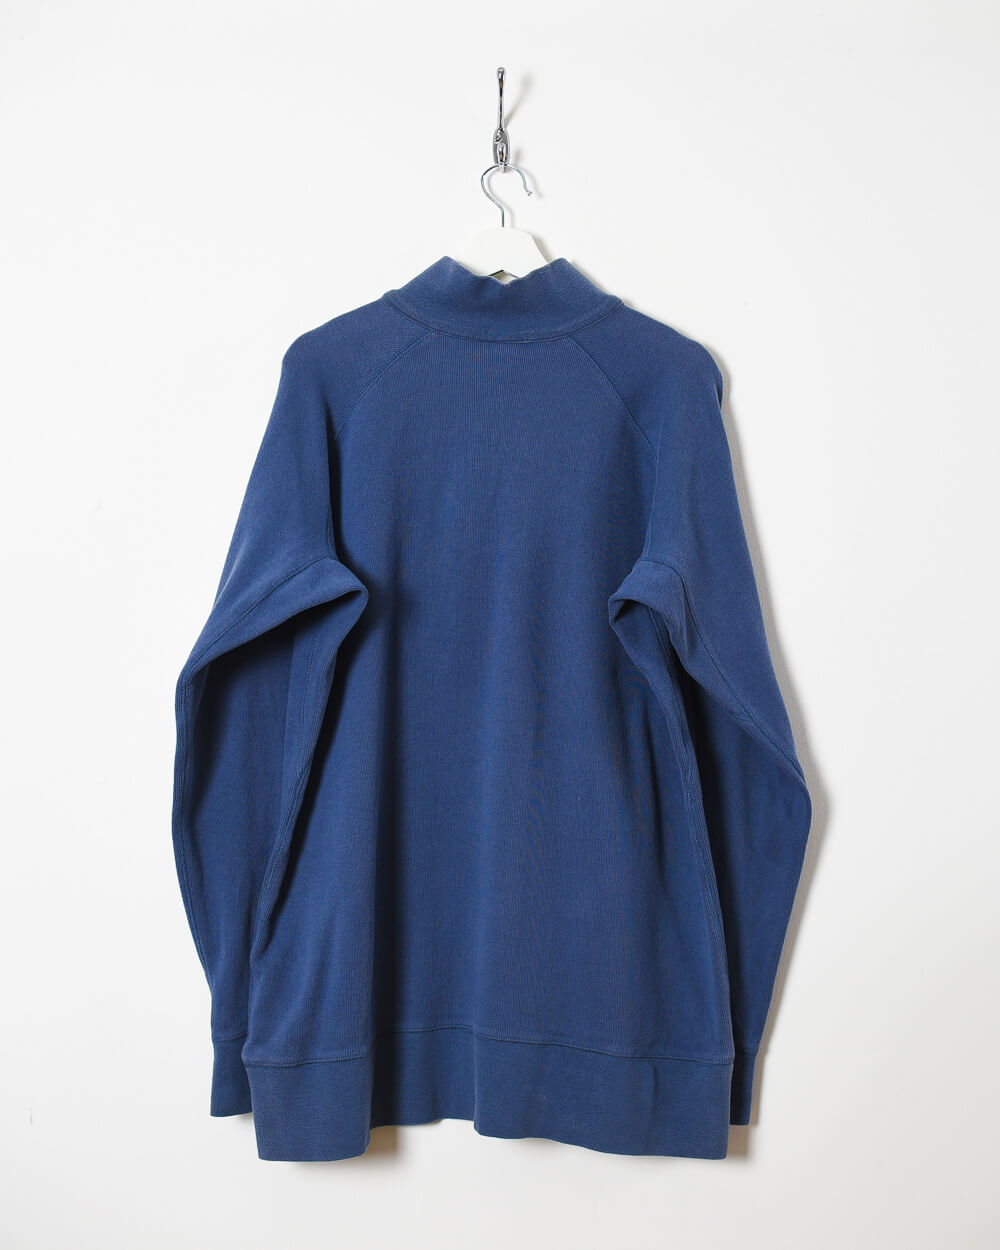 Blue Nike 1/4 Zip Sweatshirt - X-Large